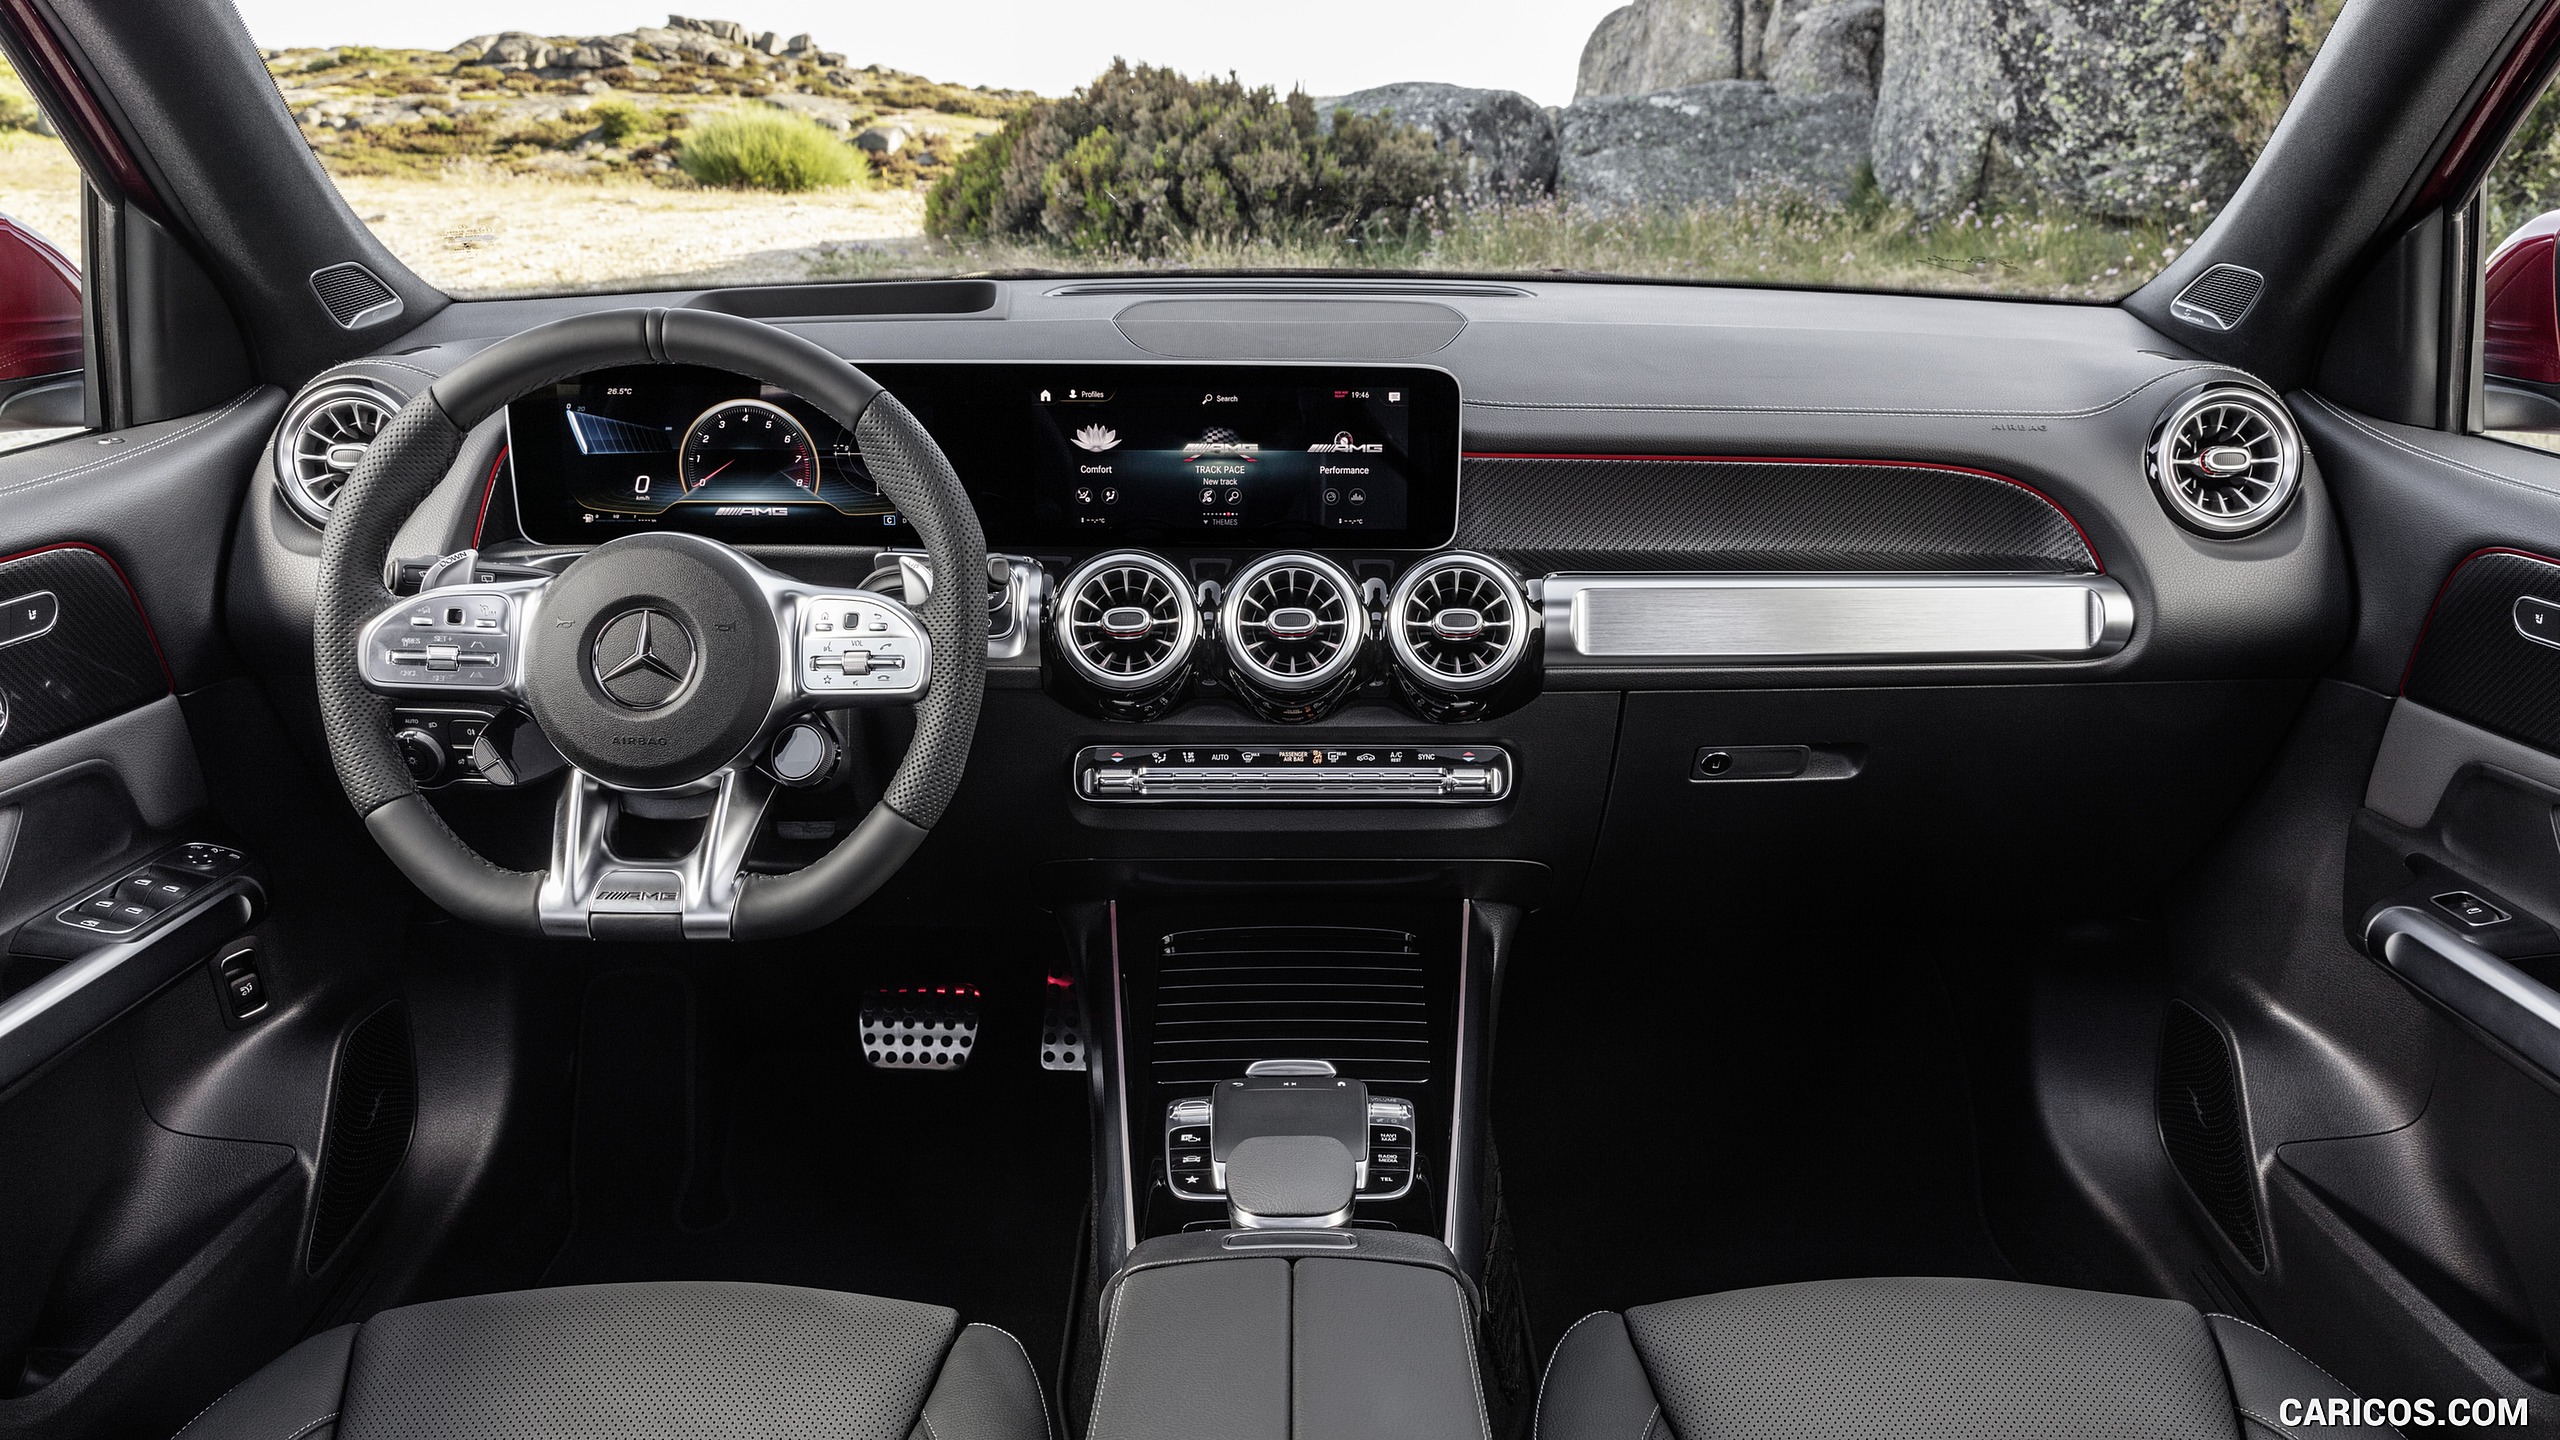 2021 Mercedes-AMG GLB 35 4MATIC - Interior, Cockpit, #25 of 95